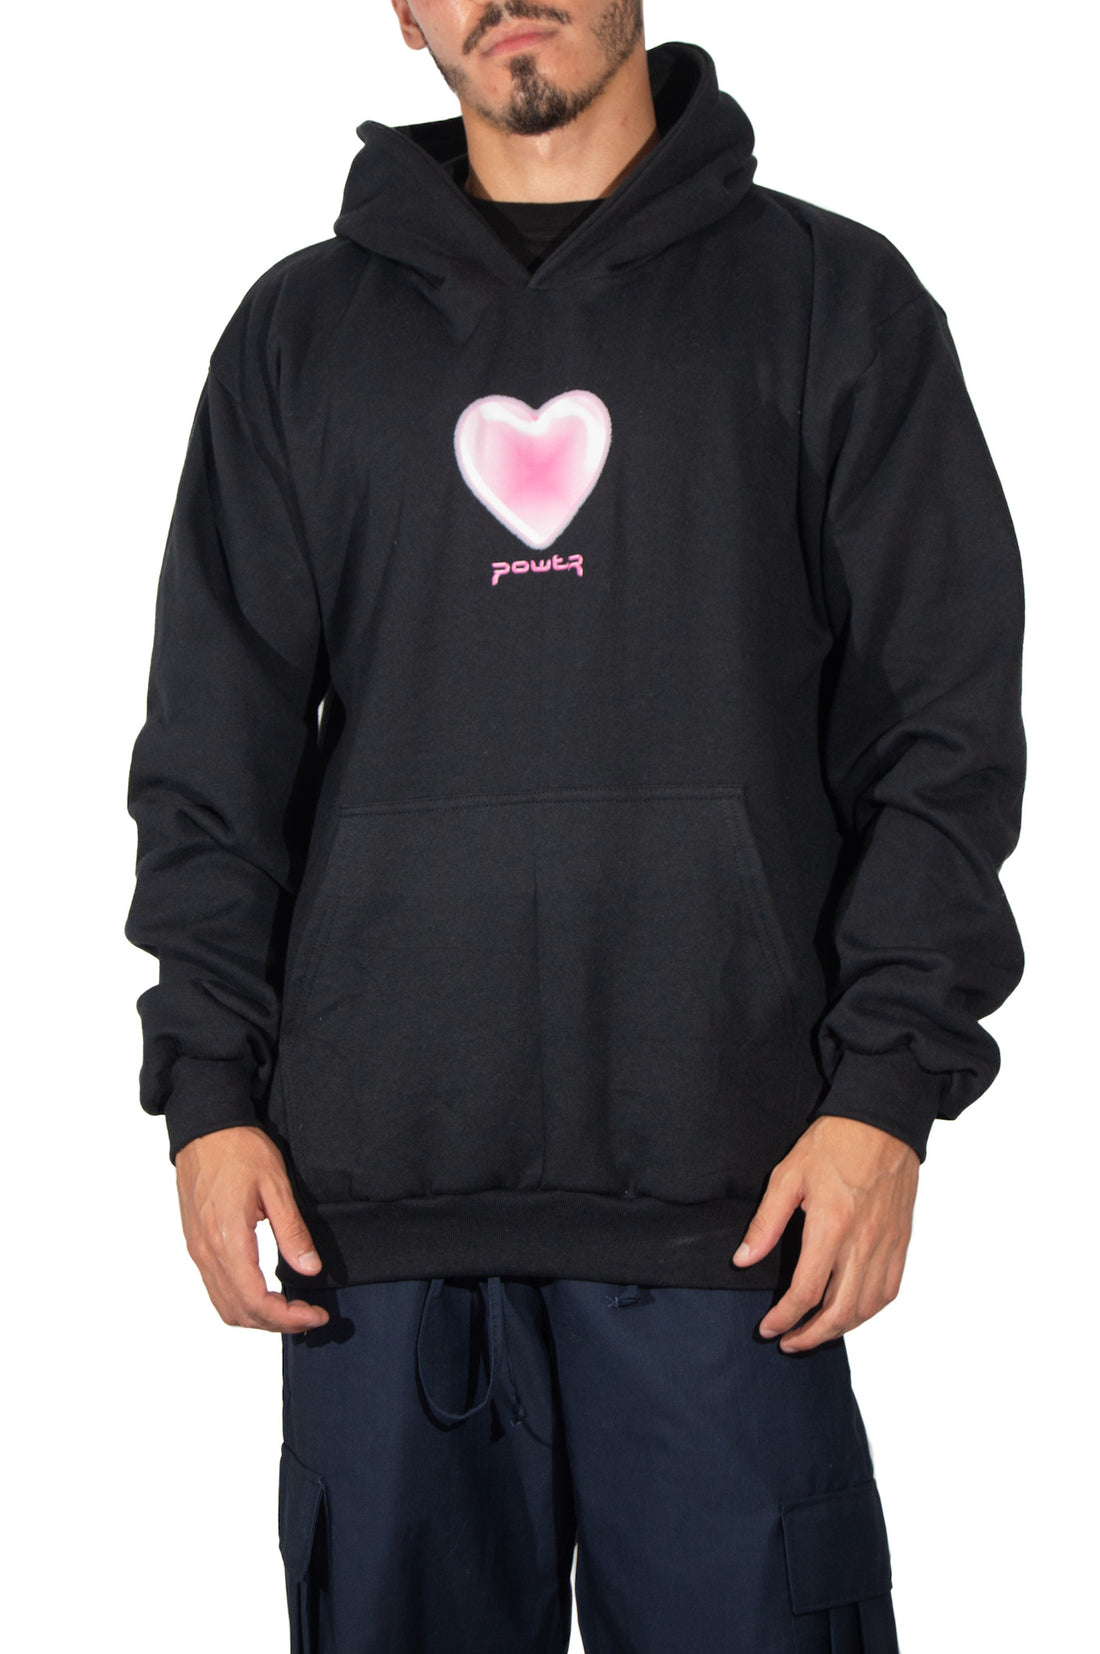 Power Heart Black Sweater